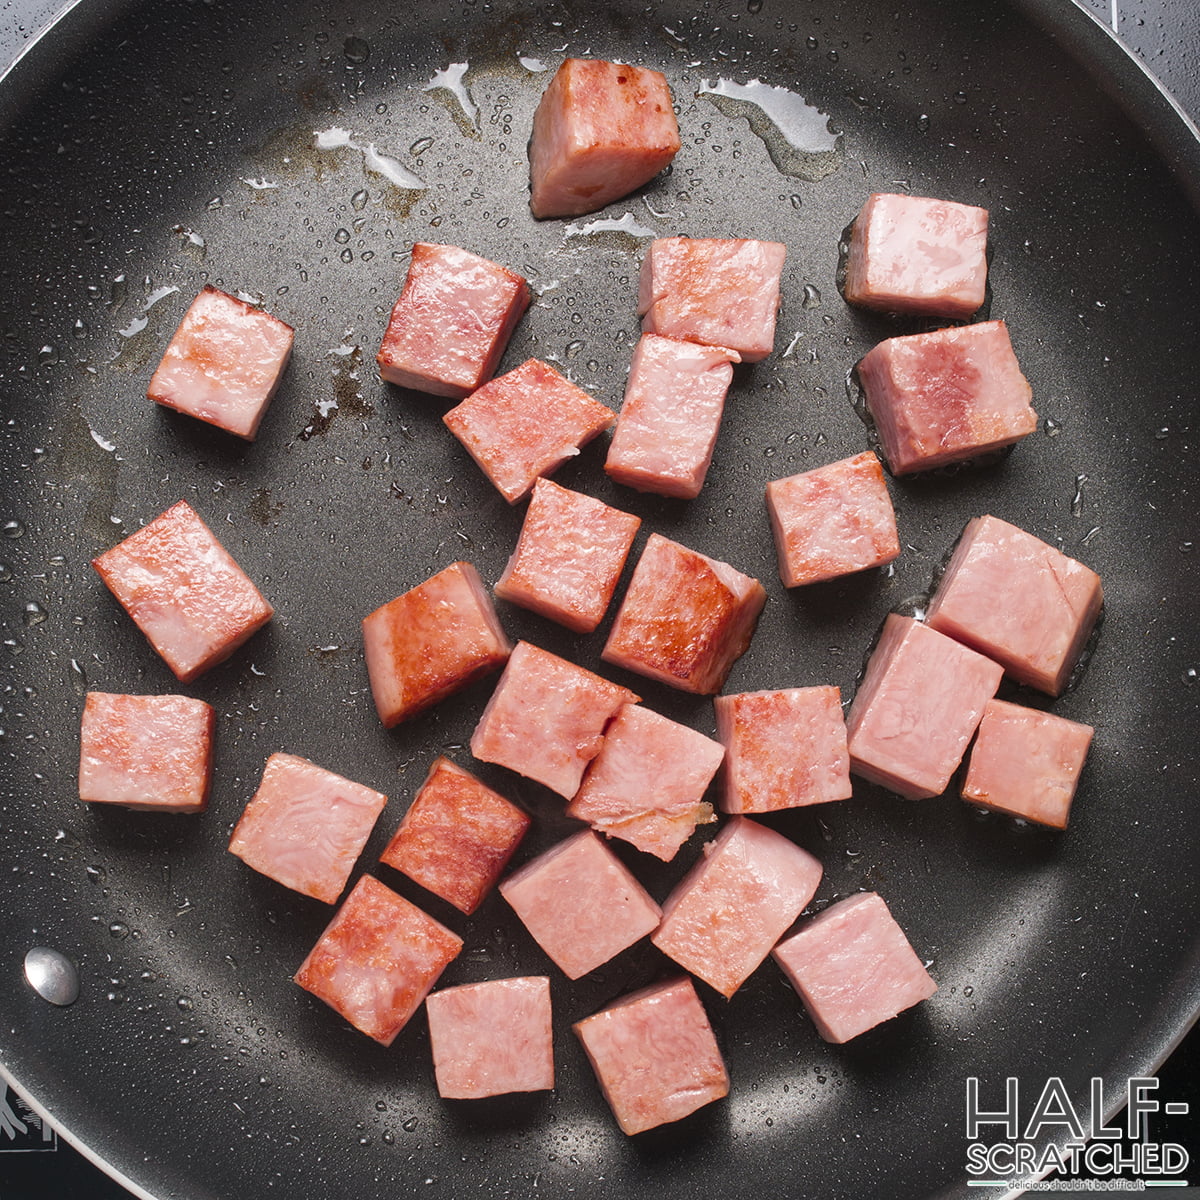  Cooking ham